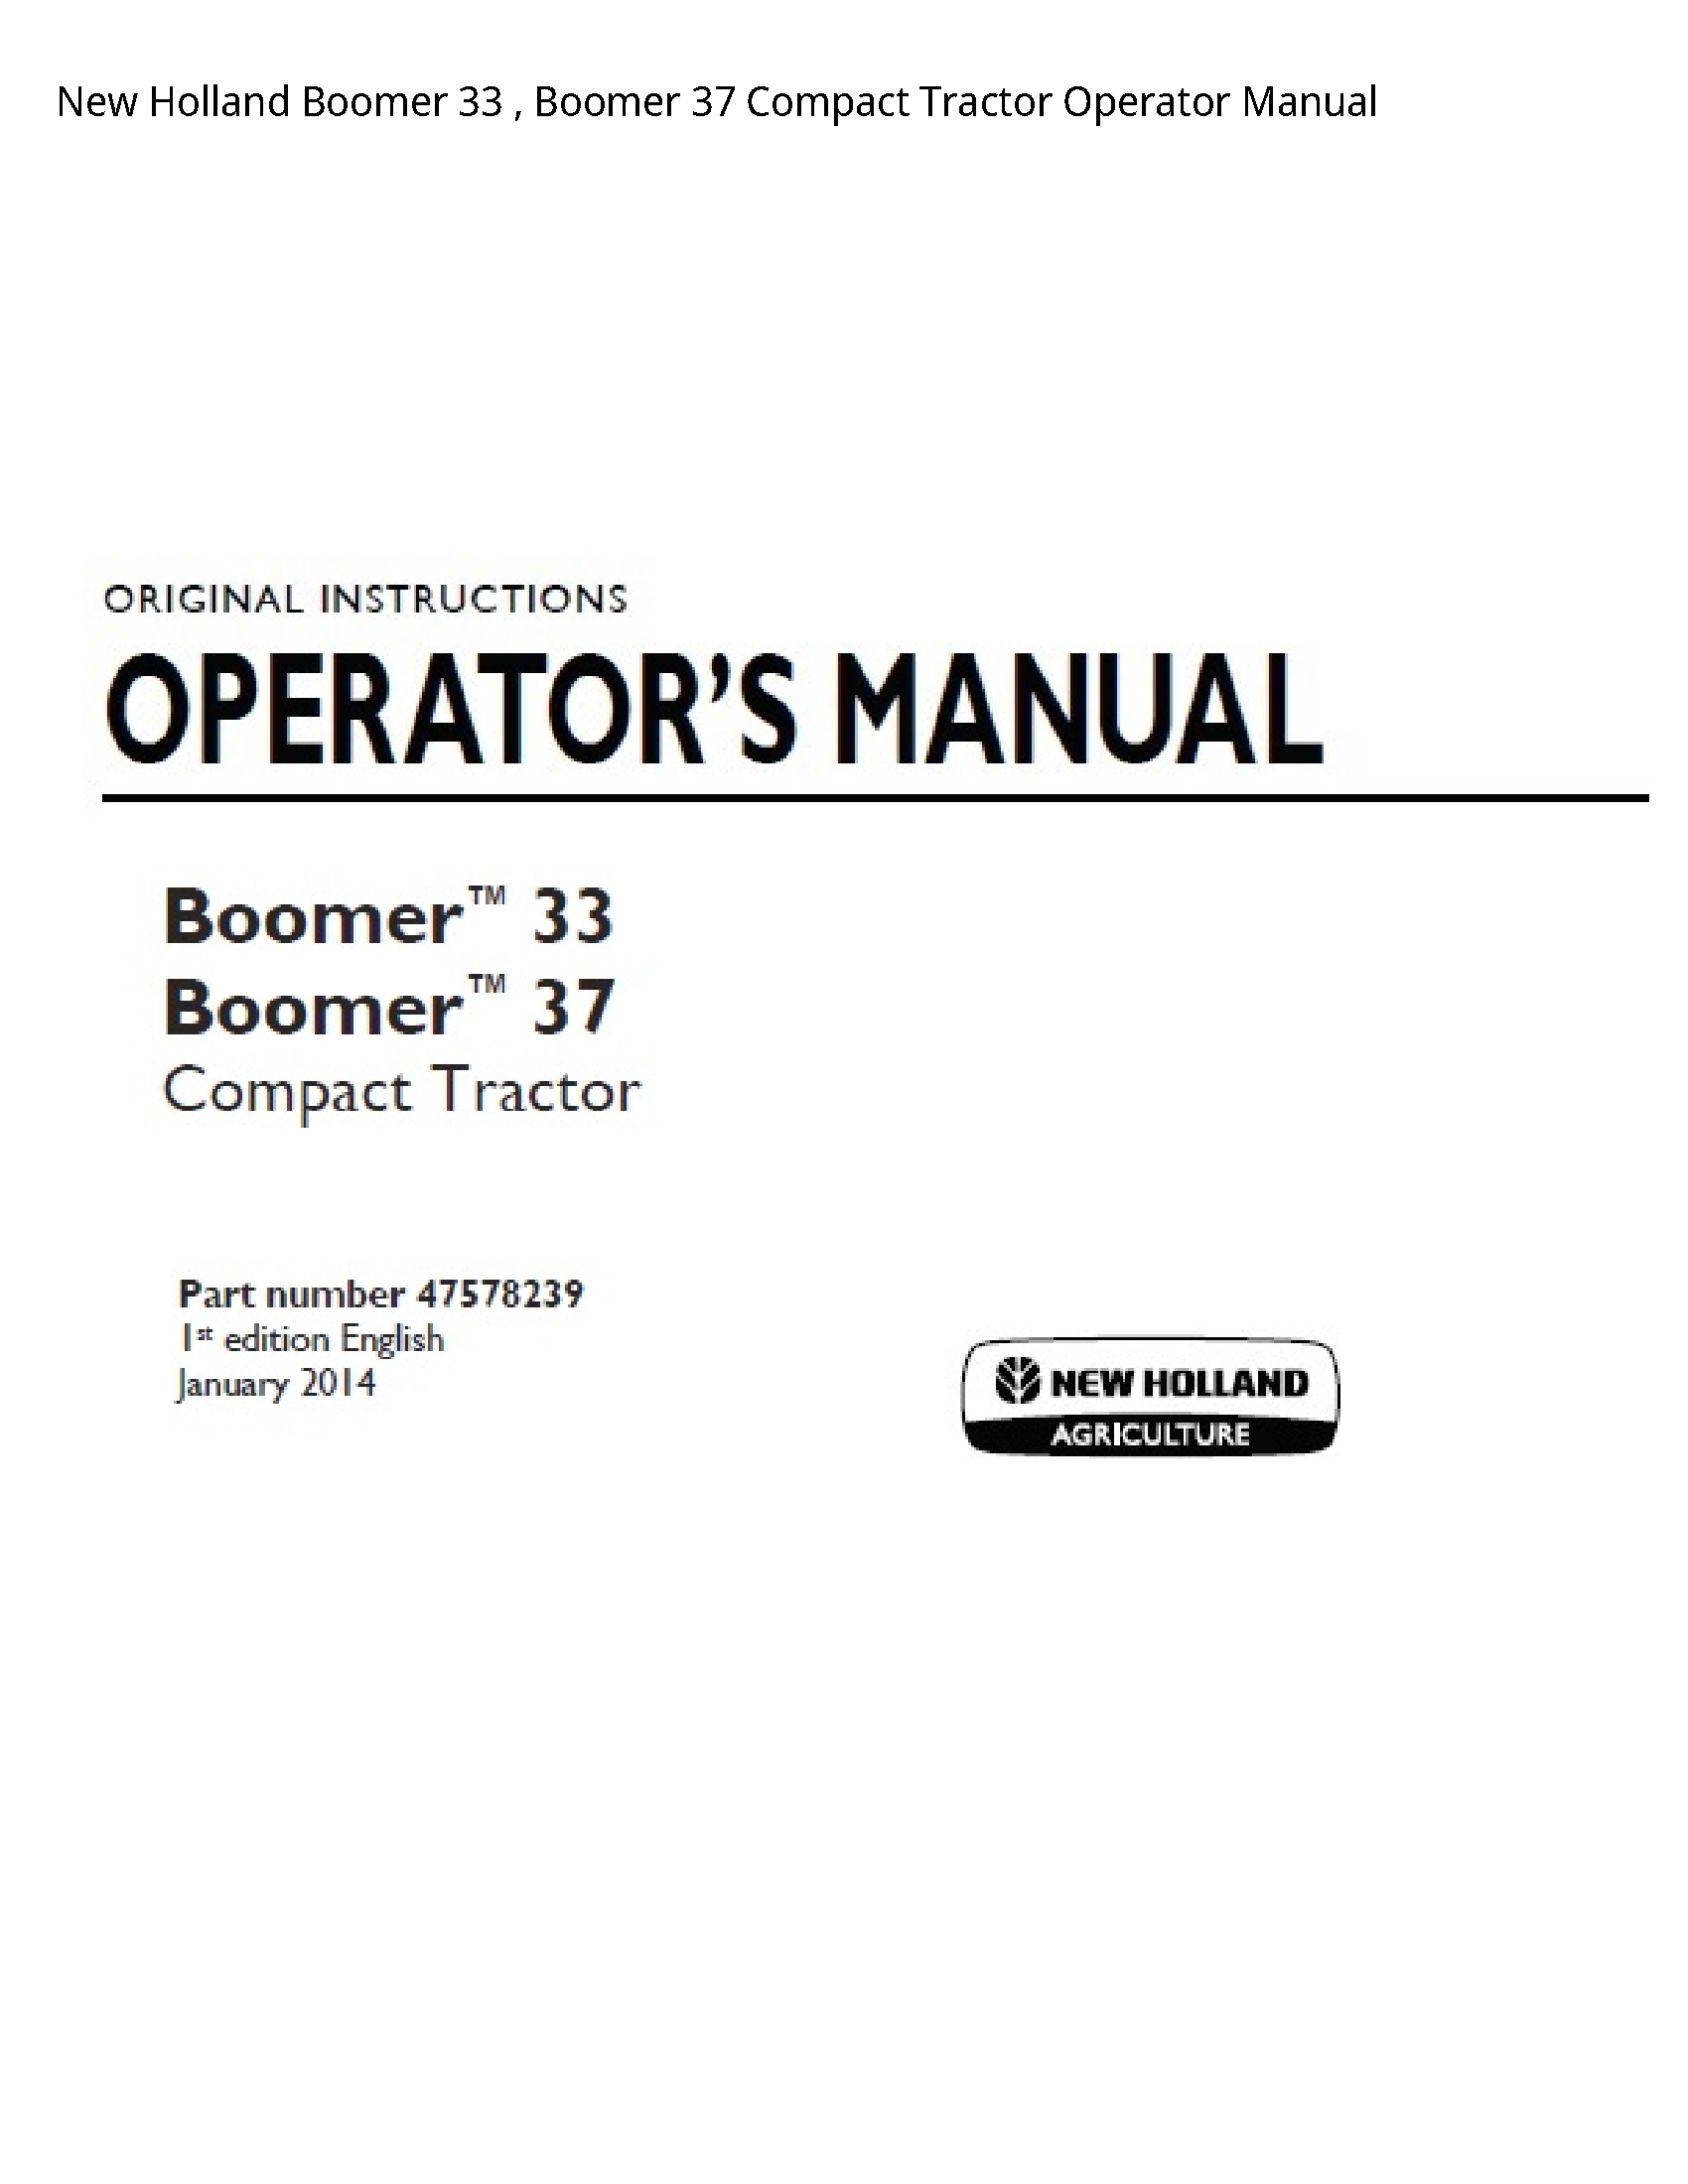 New Holland 33 Boomer Boomer Compact Tractor Operator manual